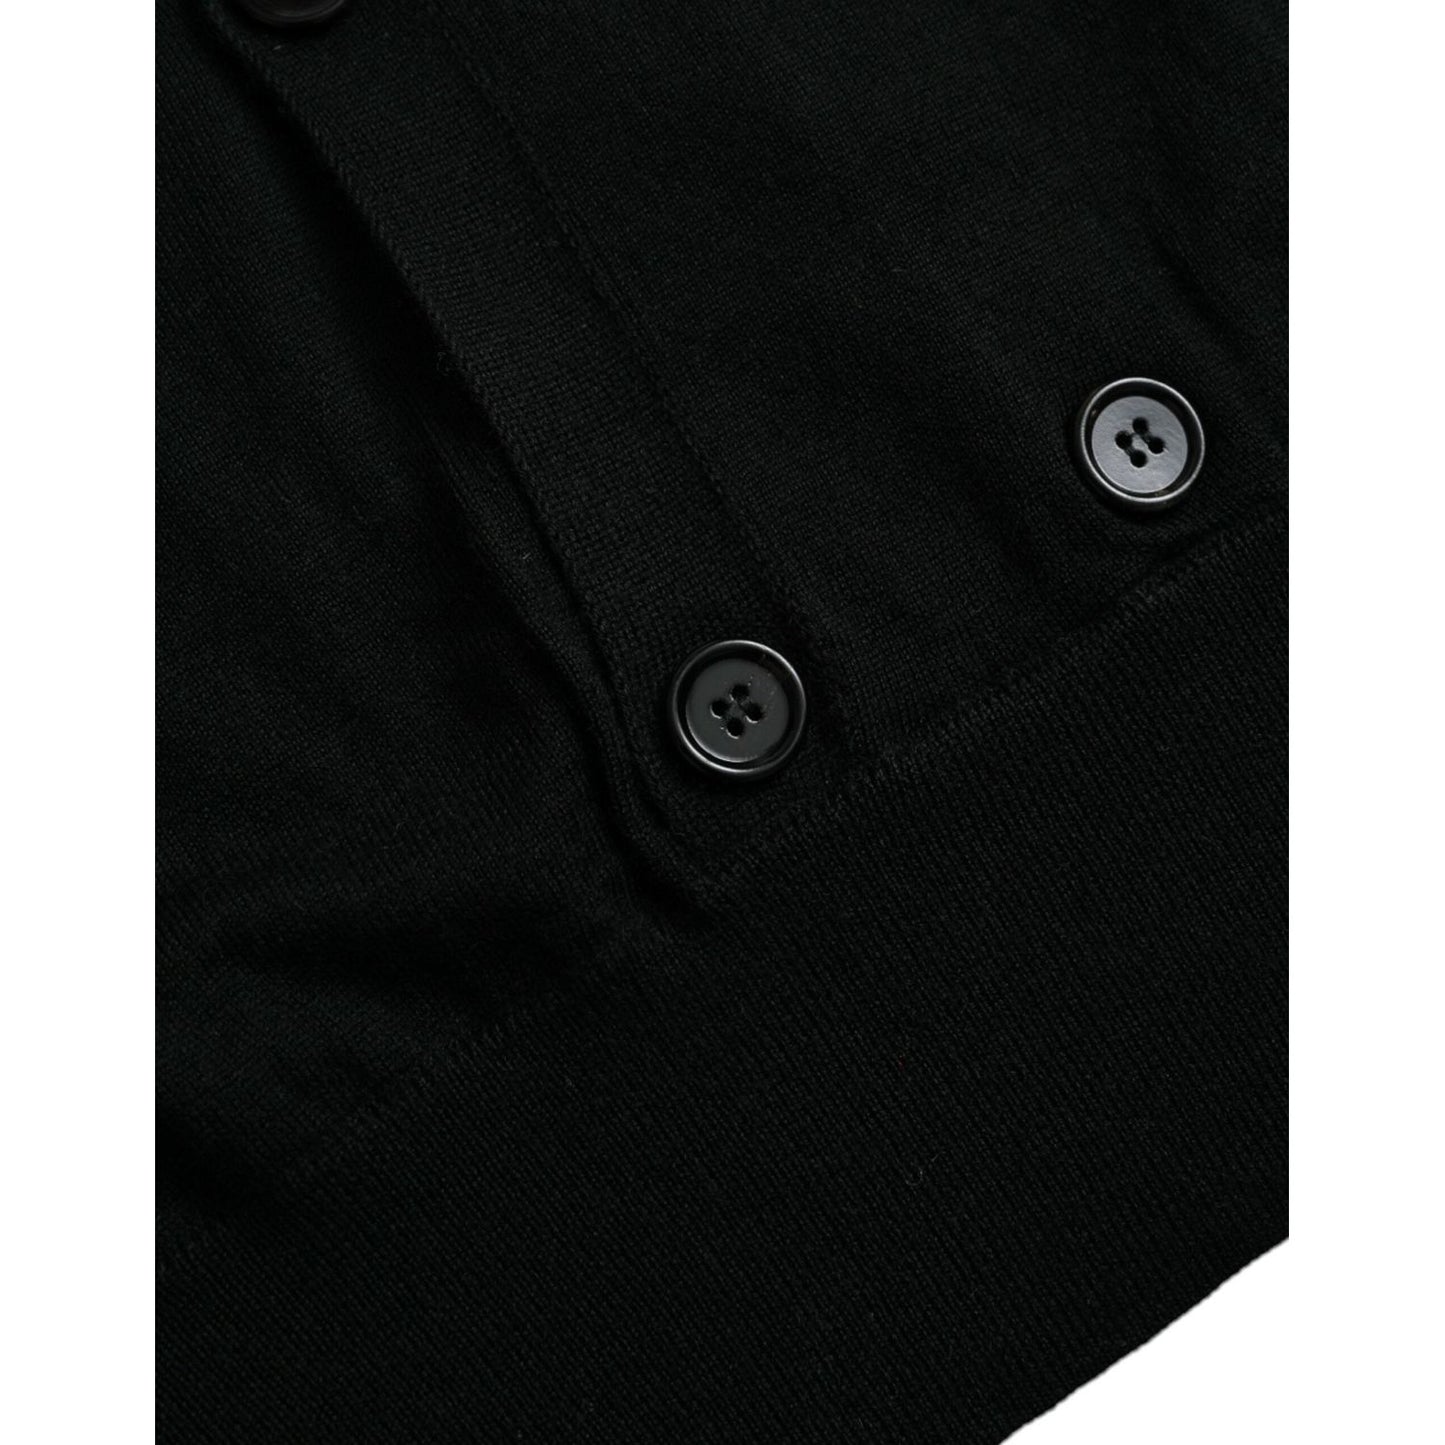 Dolce & Gabbana Black Cashmere Knit Long Sleeves Cardigan Sweater black-cashmere-knit-long-sleeves-cardigan-sweater